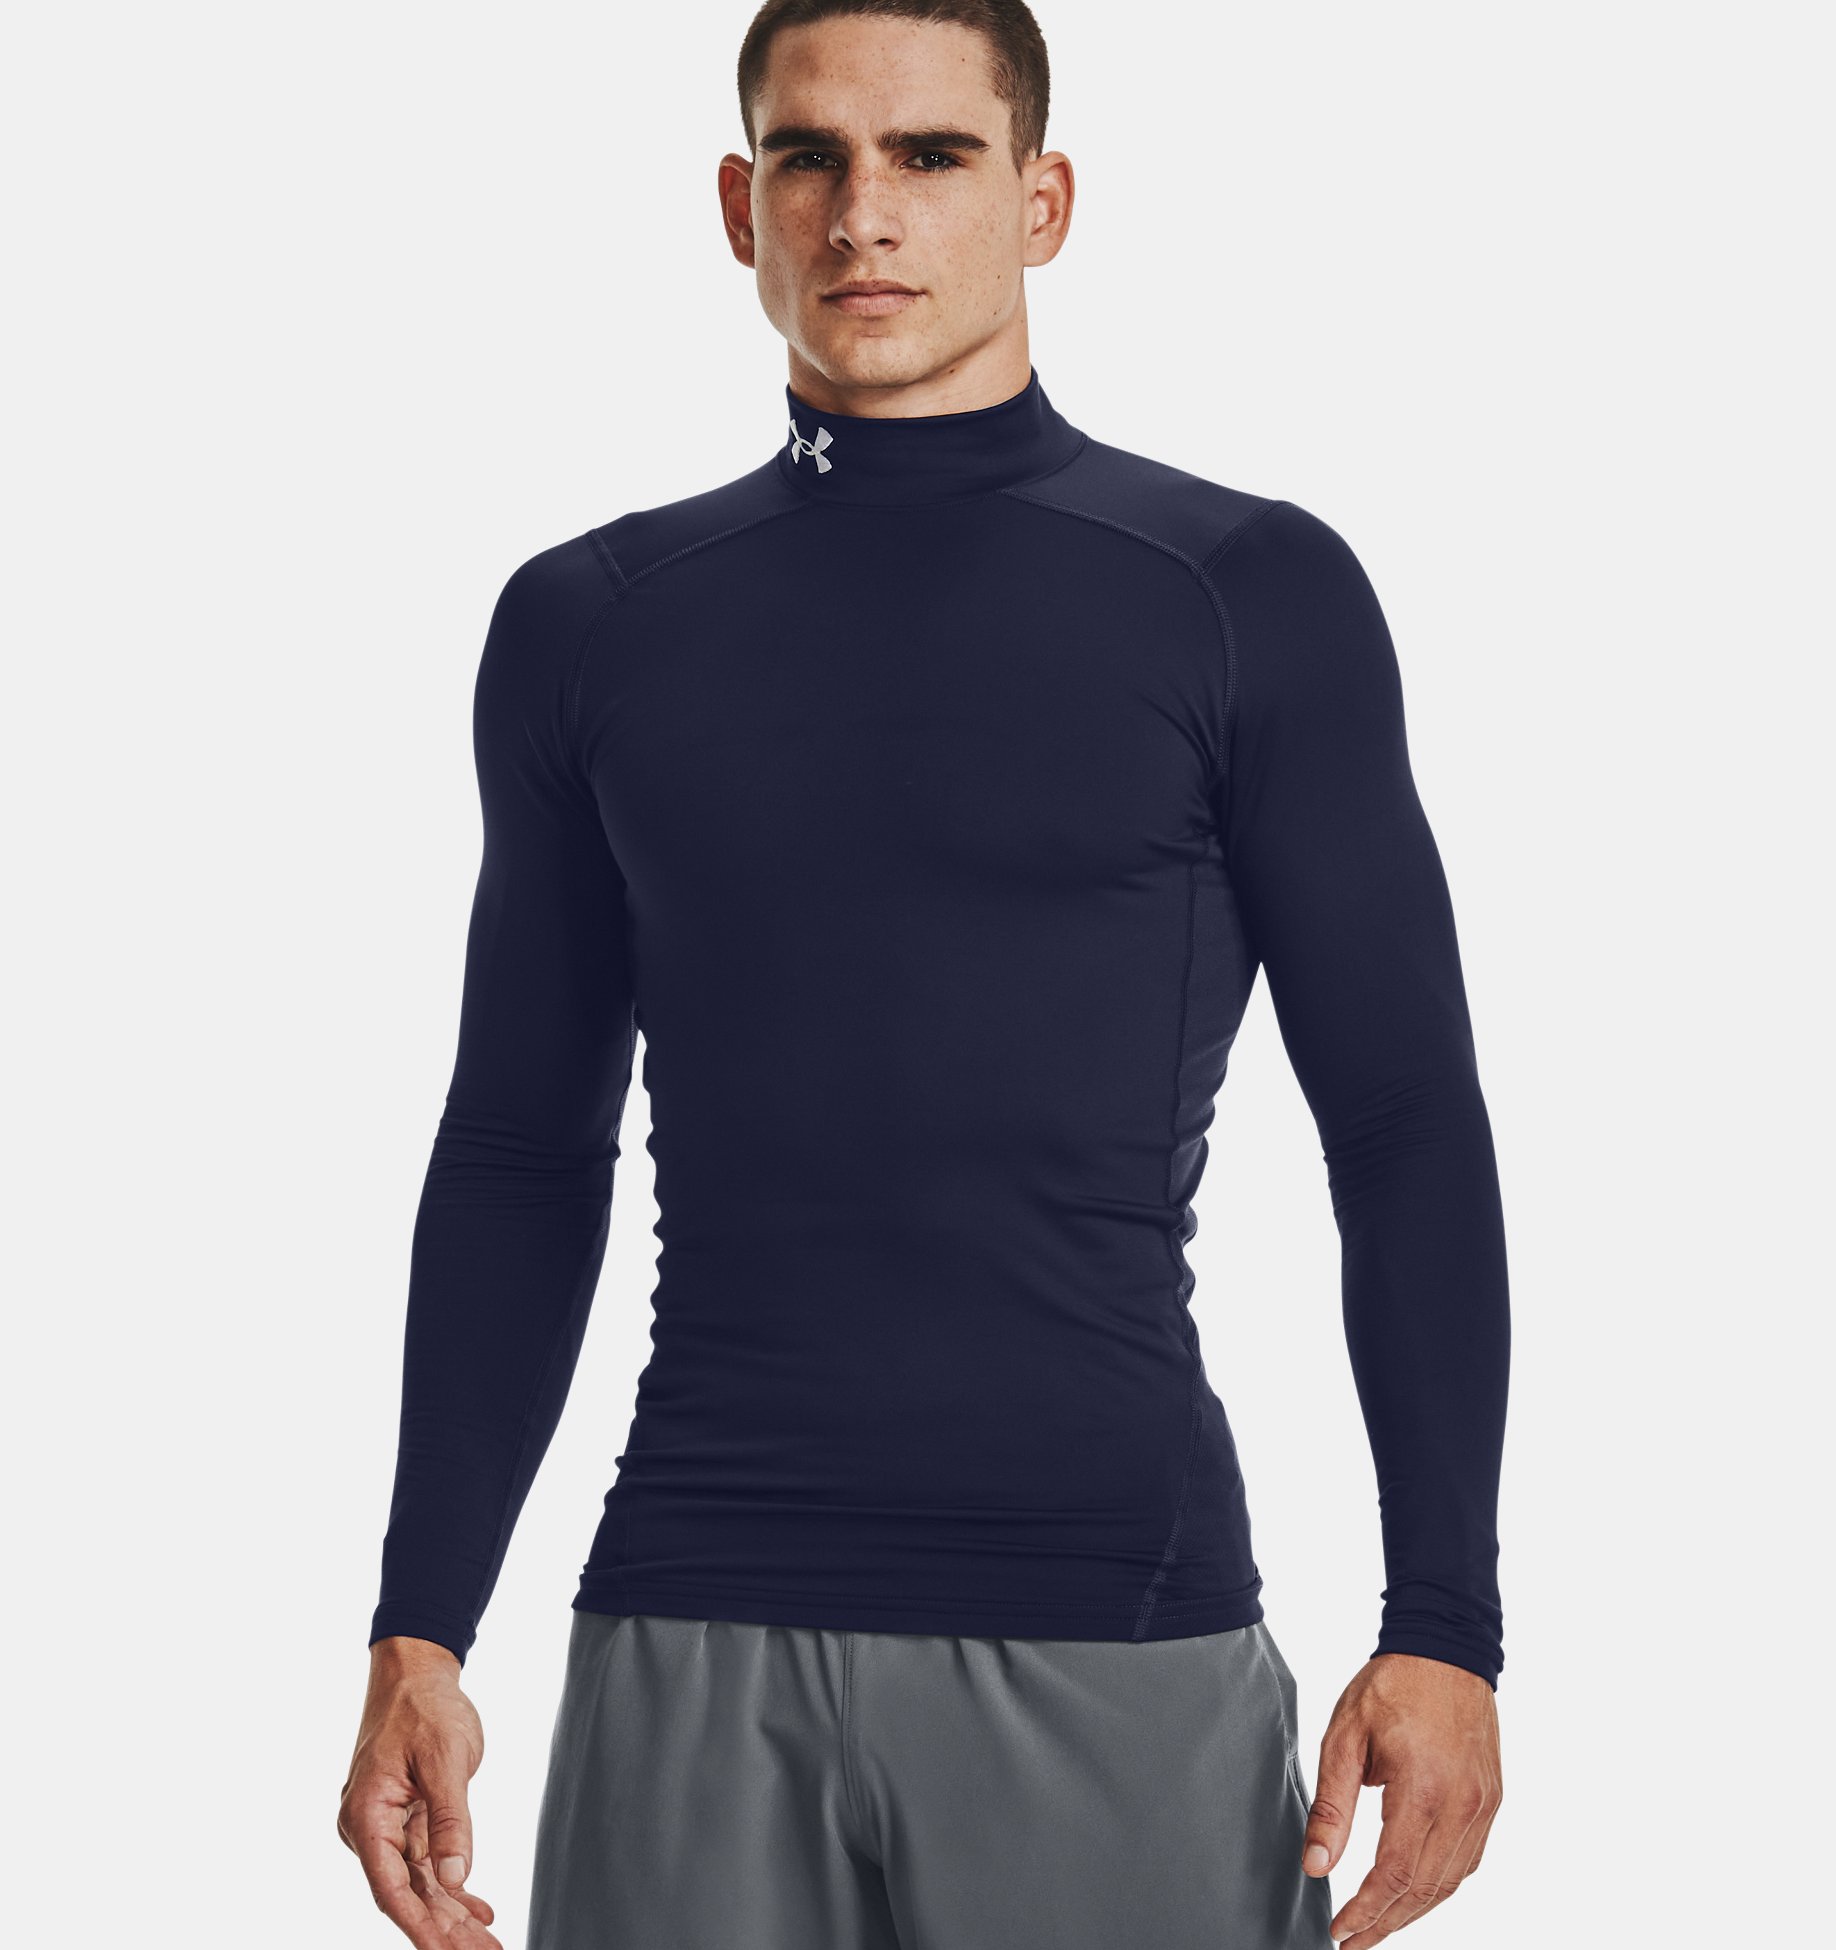 Mock Turtleneck Men Shirts Tops Base Layer Compression Long Sleeve T Shirts LO 